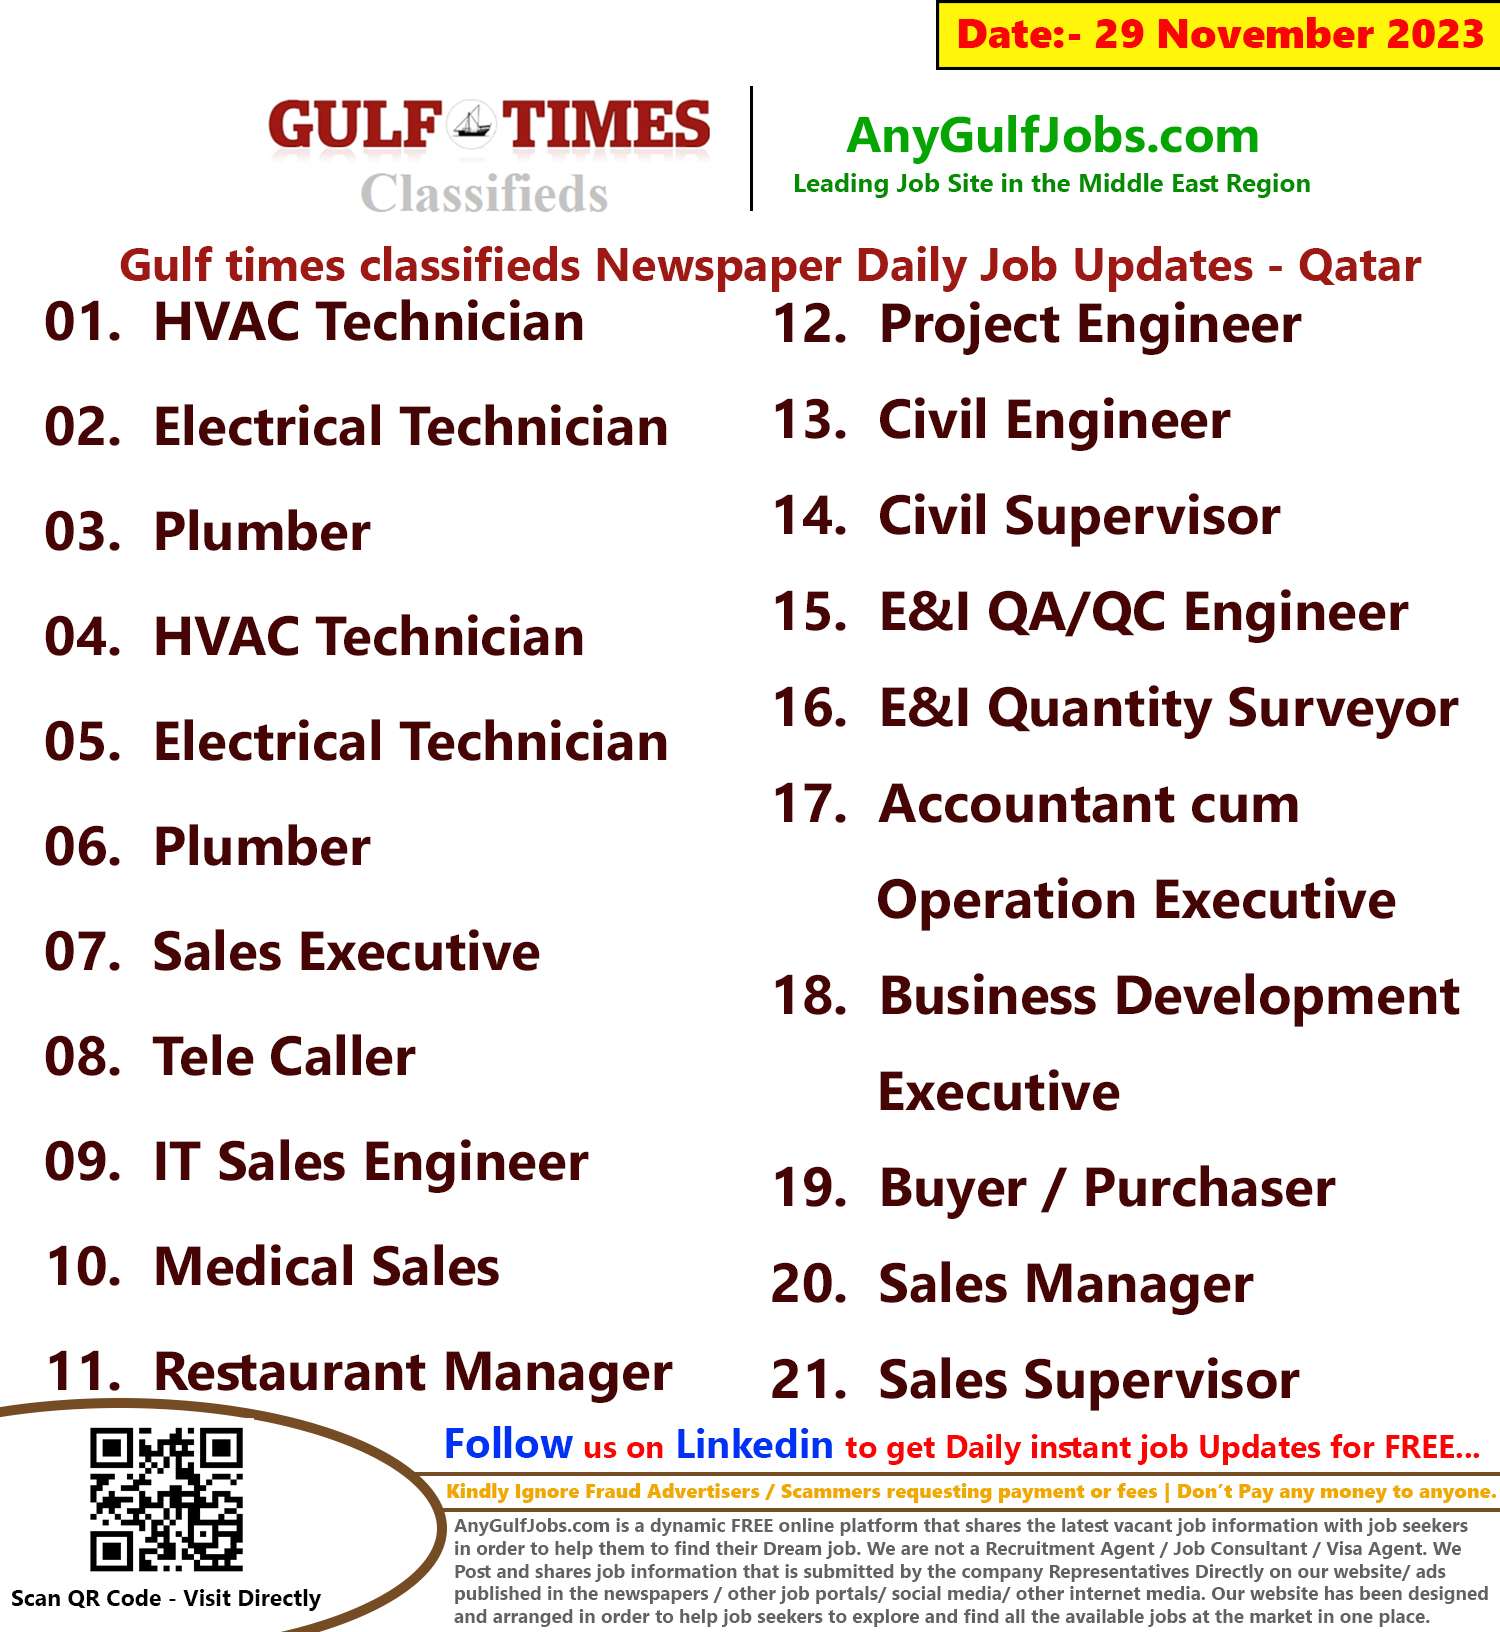 Gulf Times Classifieds Job Vacancies Qatar - 29 November 2023